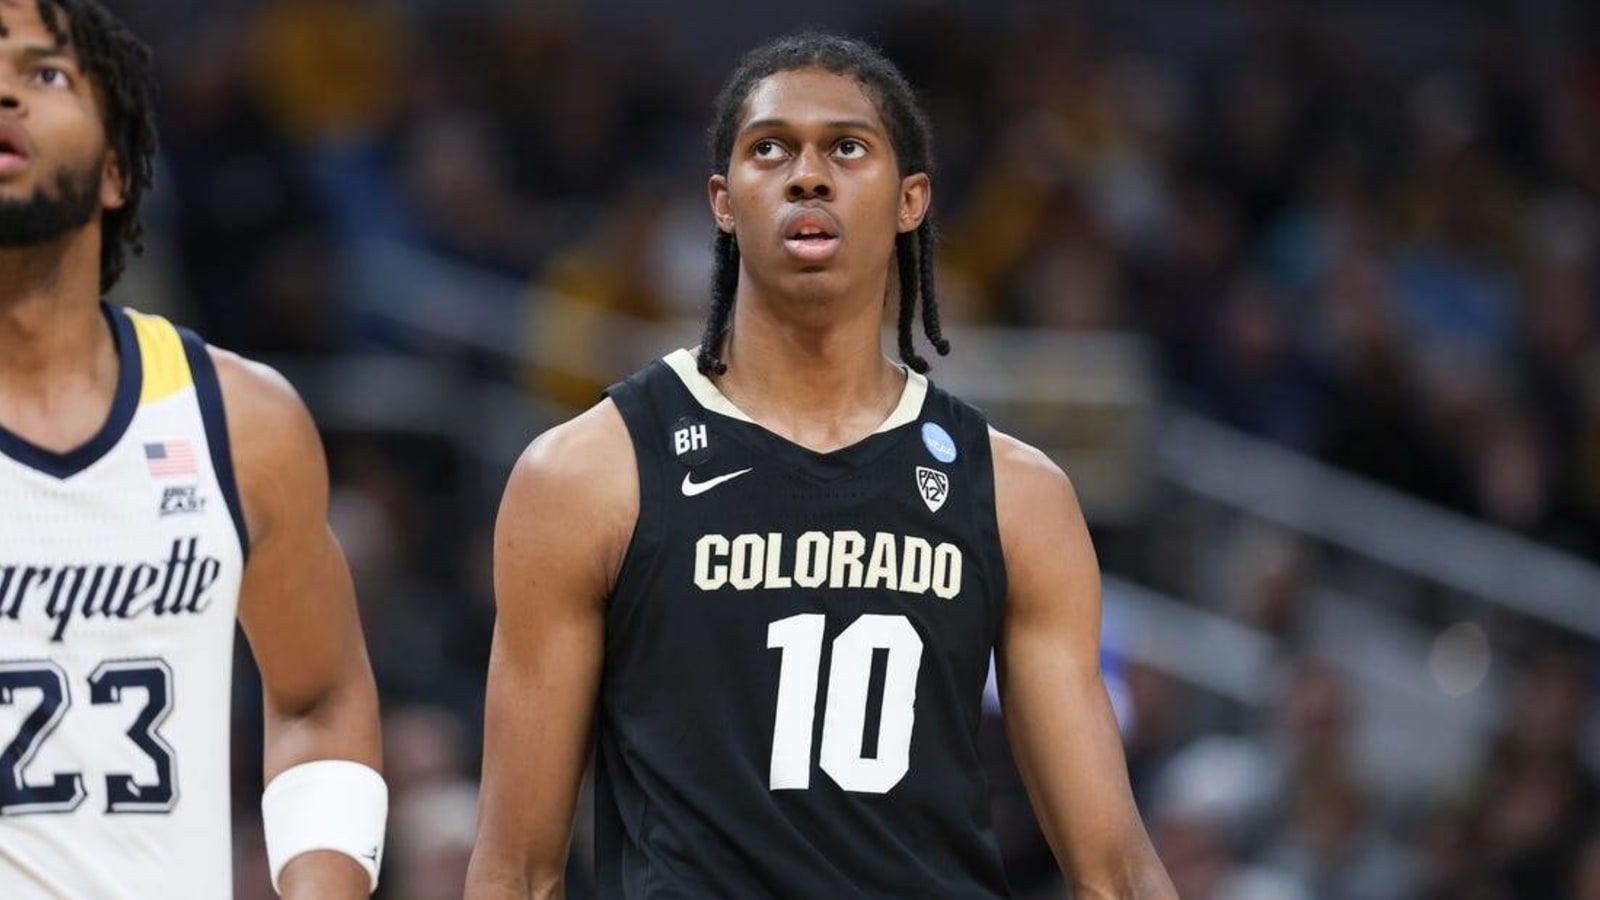 Colorado freshman Cody Williams declares for NBA draft